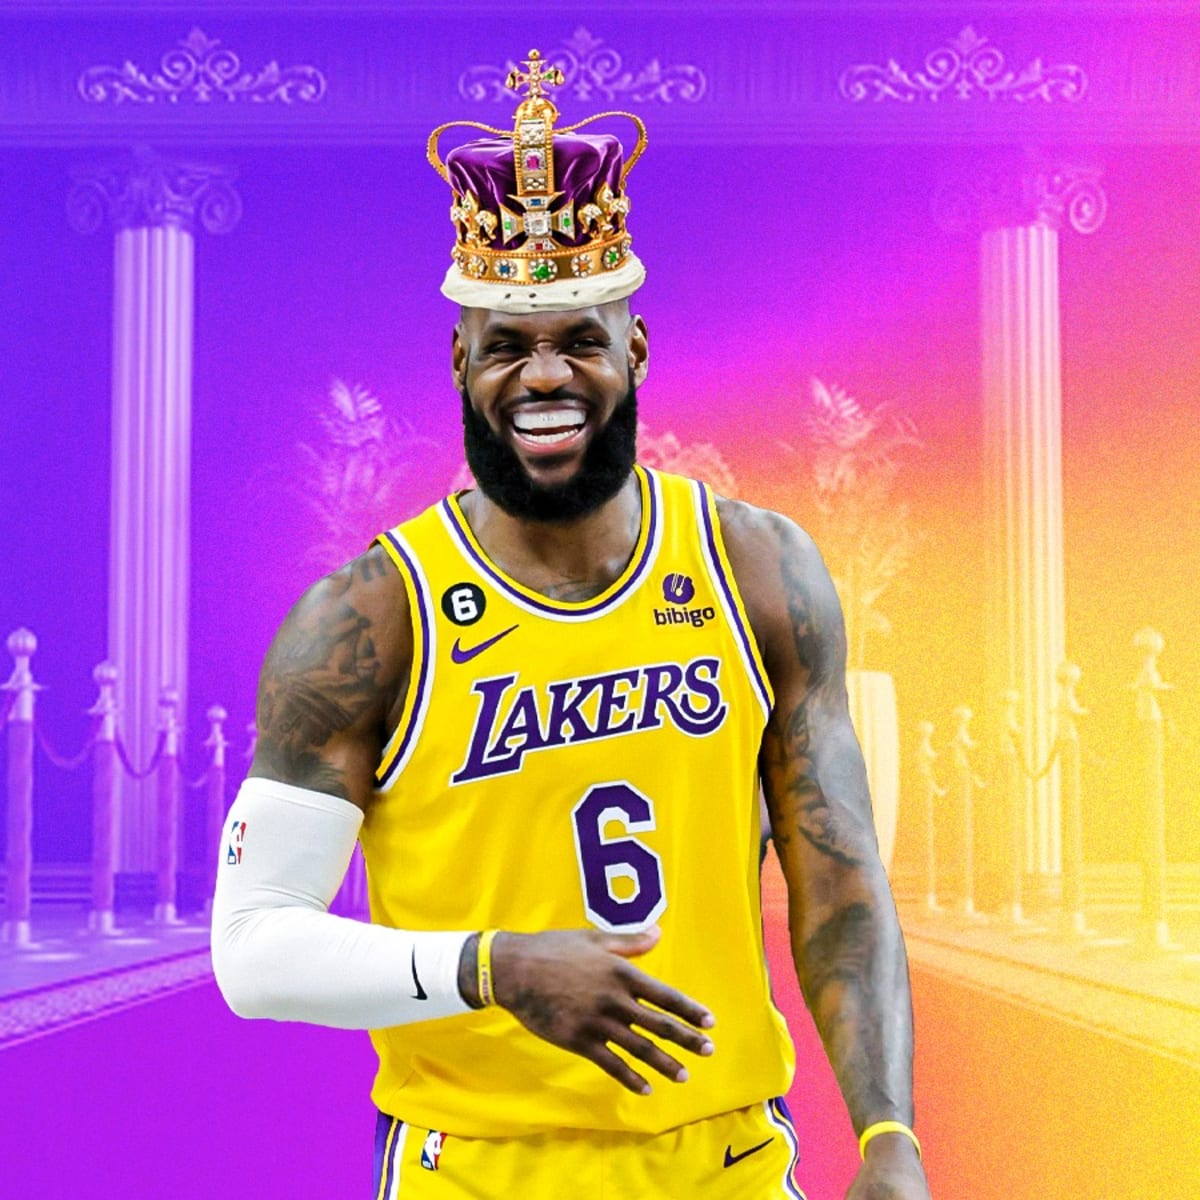 LeBron James becomes NBA's all-time scoring king